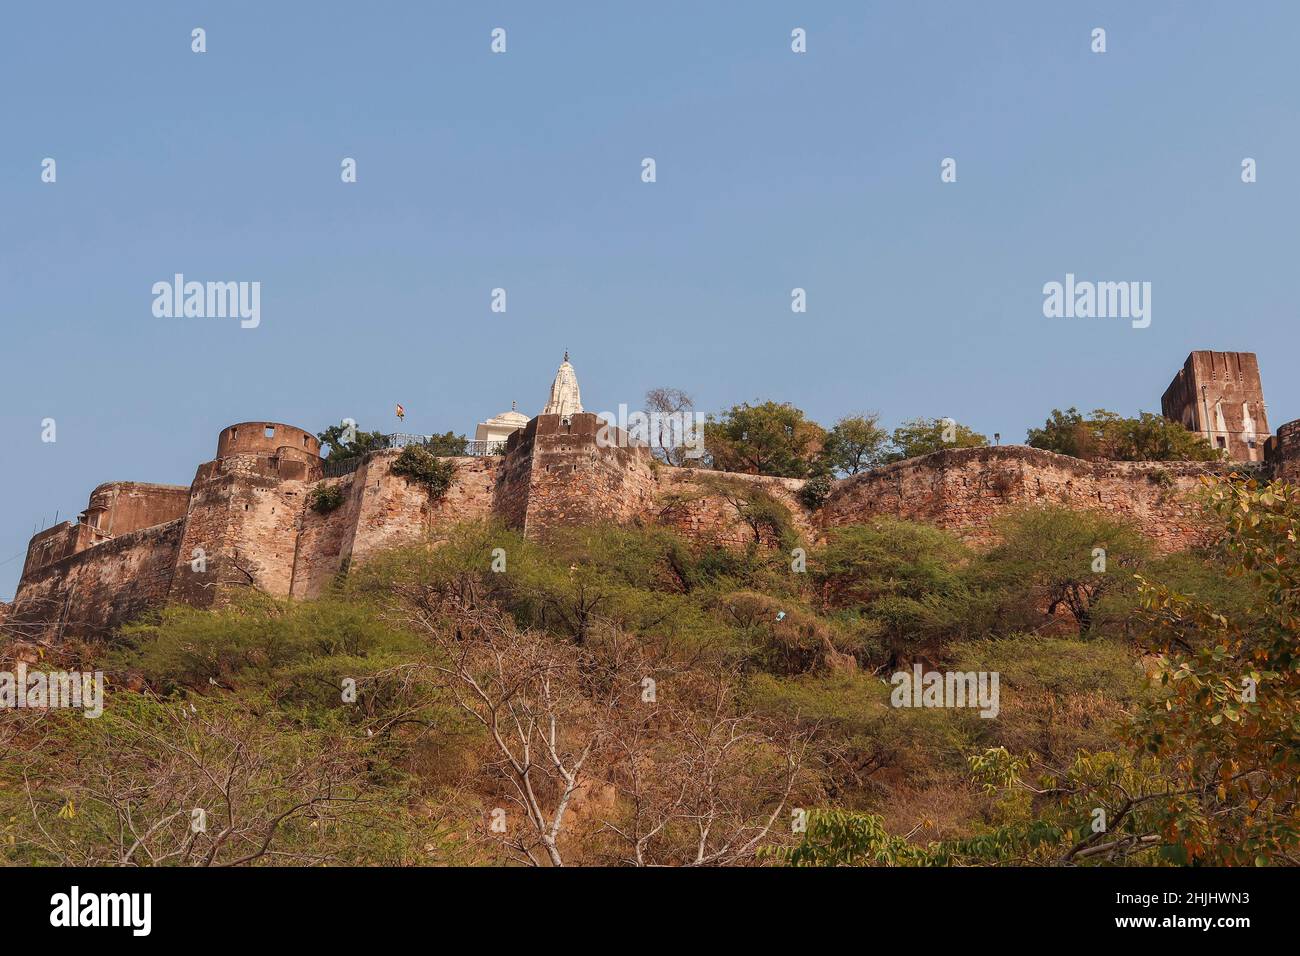 Jaipur, Rajasthan, India - 20 febbraio 2021: Moti Dungri Jaipur, Rajasthan, india. Foto Stock